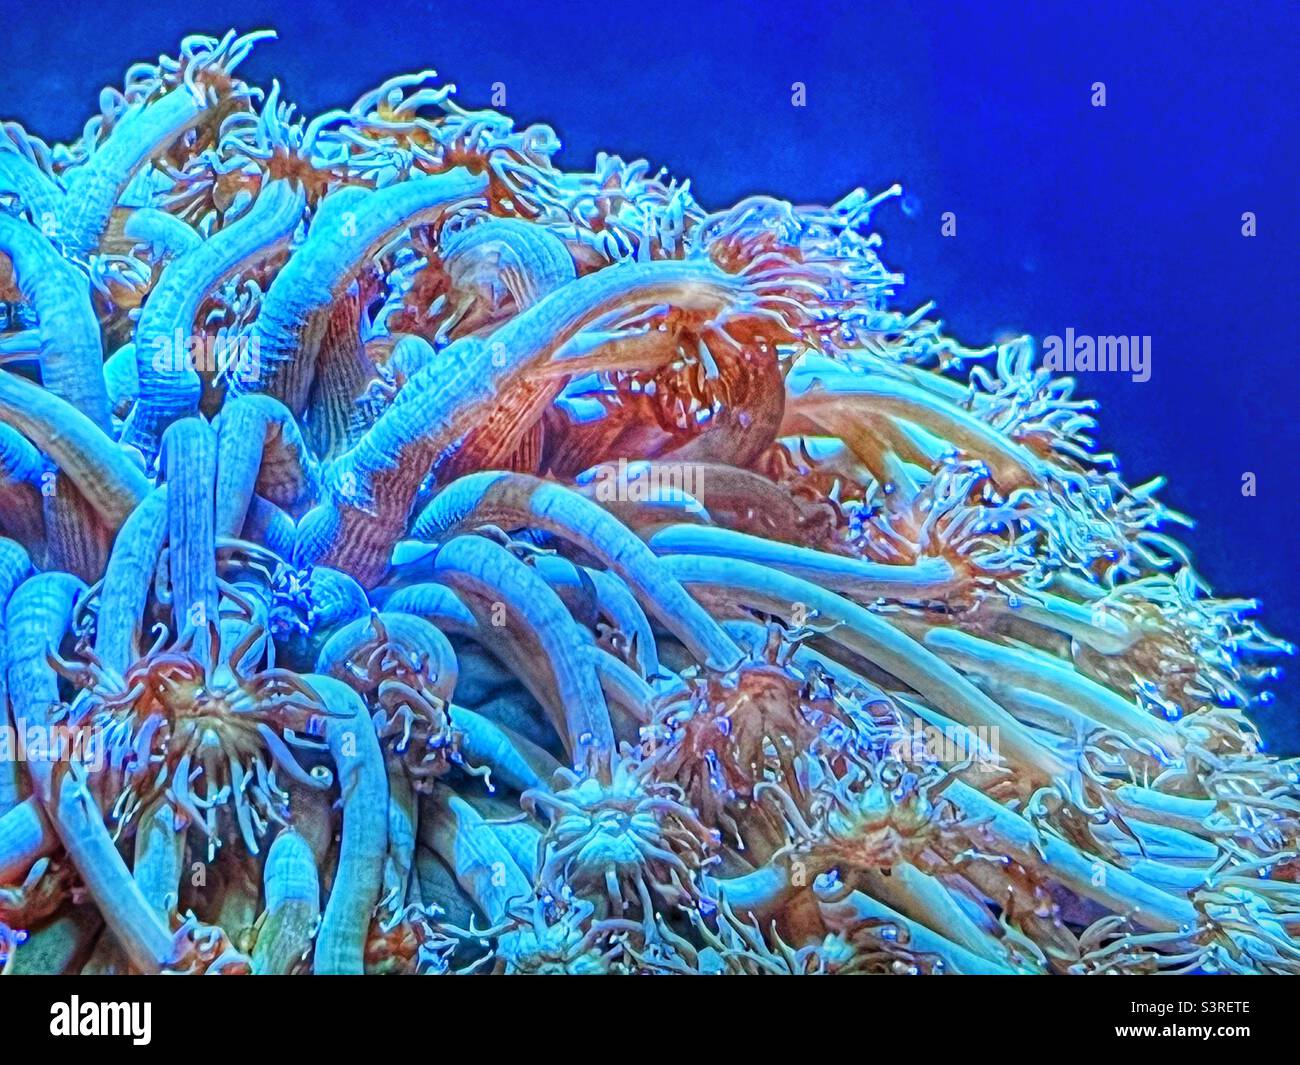 Flowerpot coral known as Goniopora lobata Stock Photo